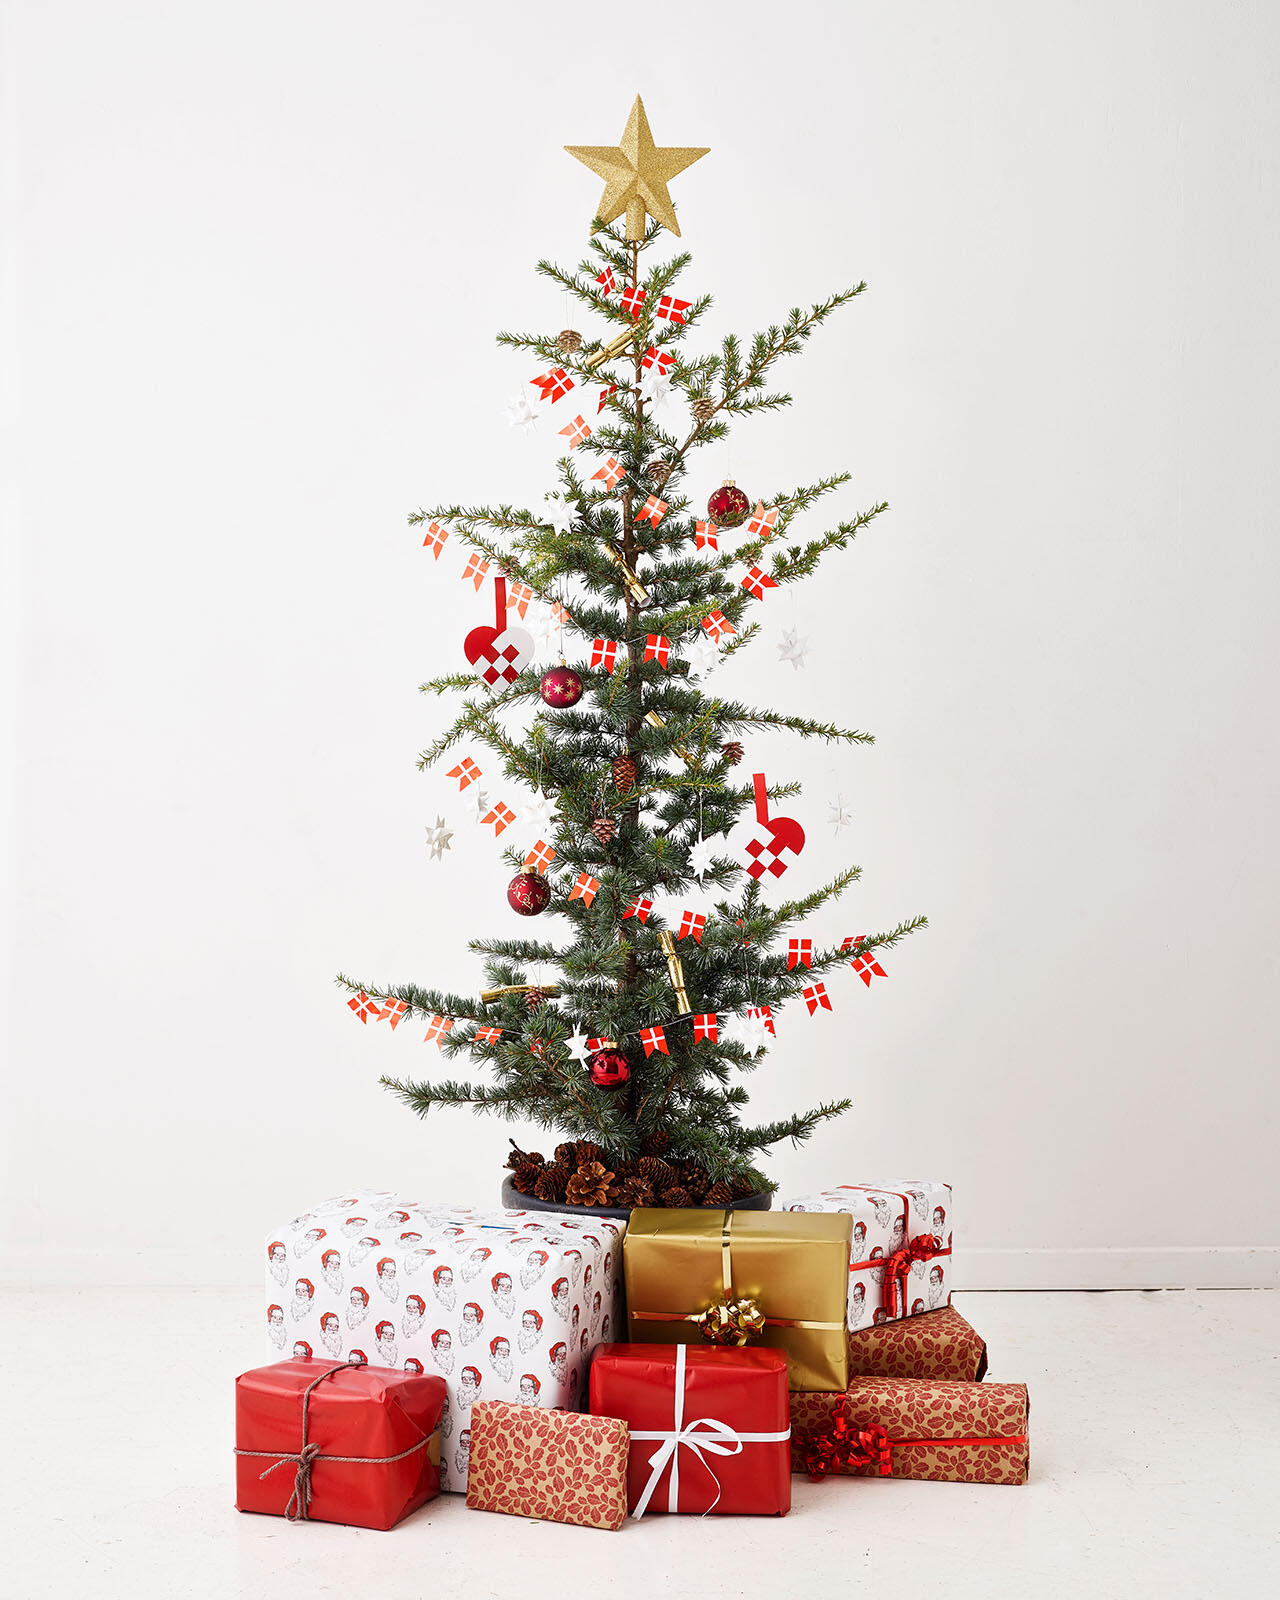 Cedertræ med juletræspynt